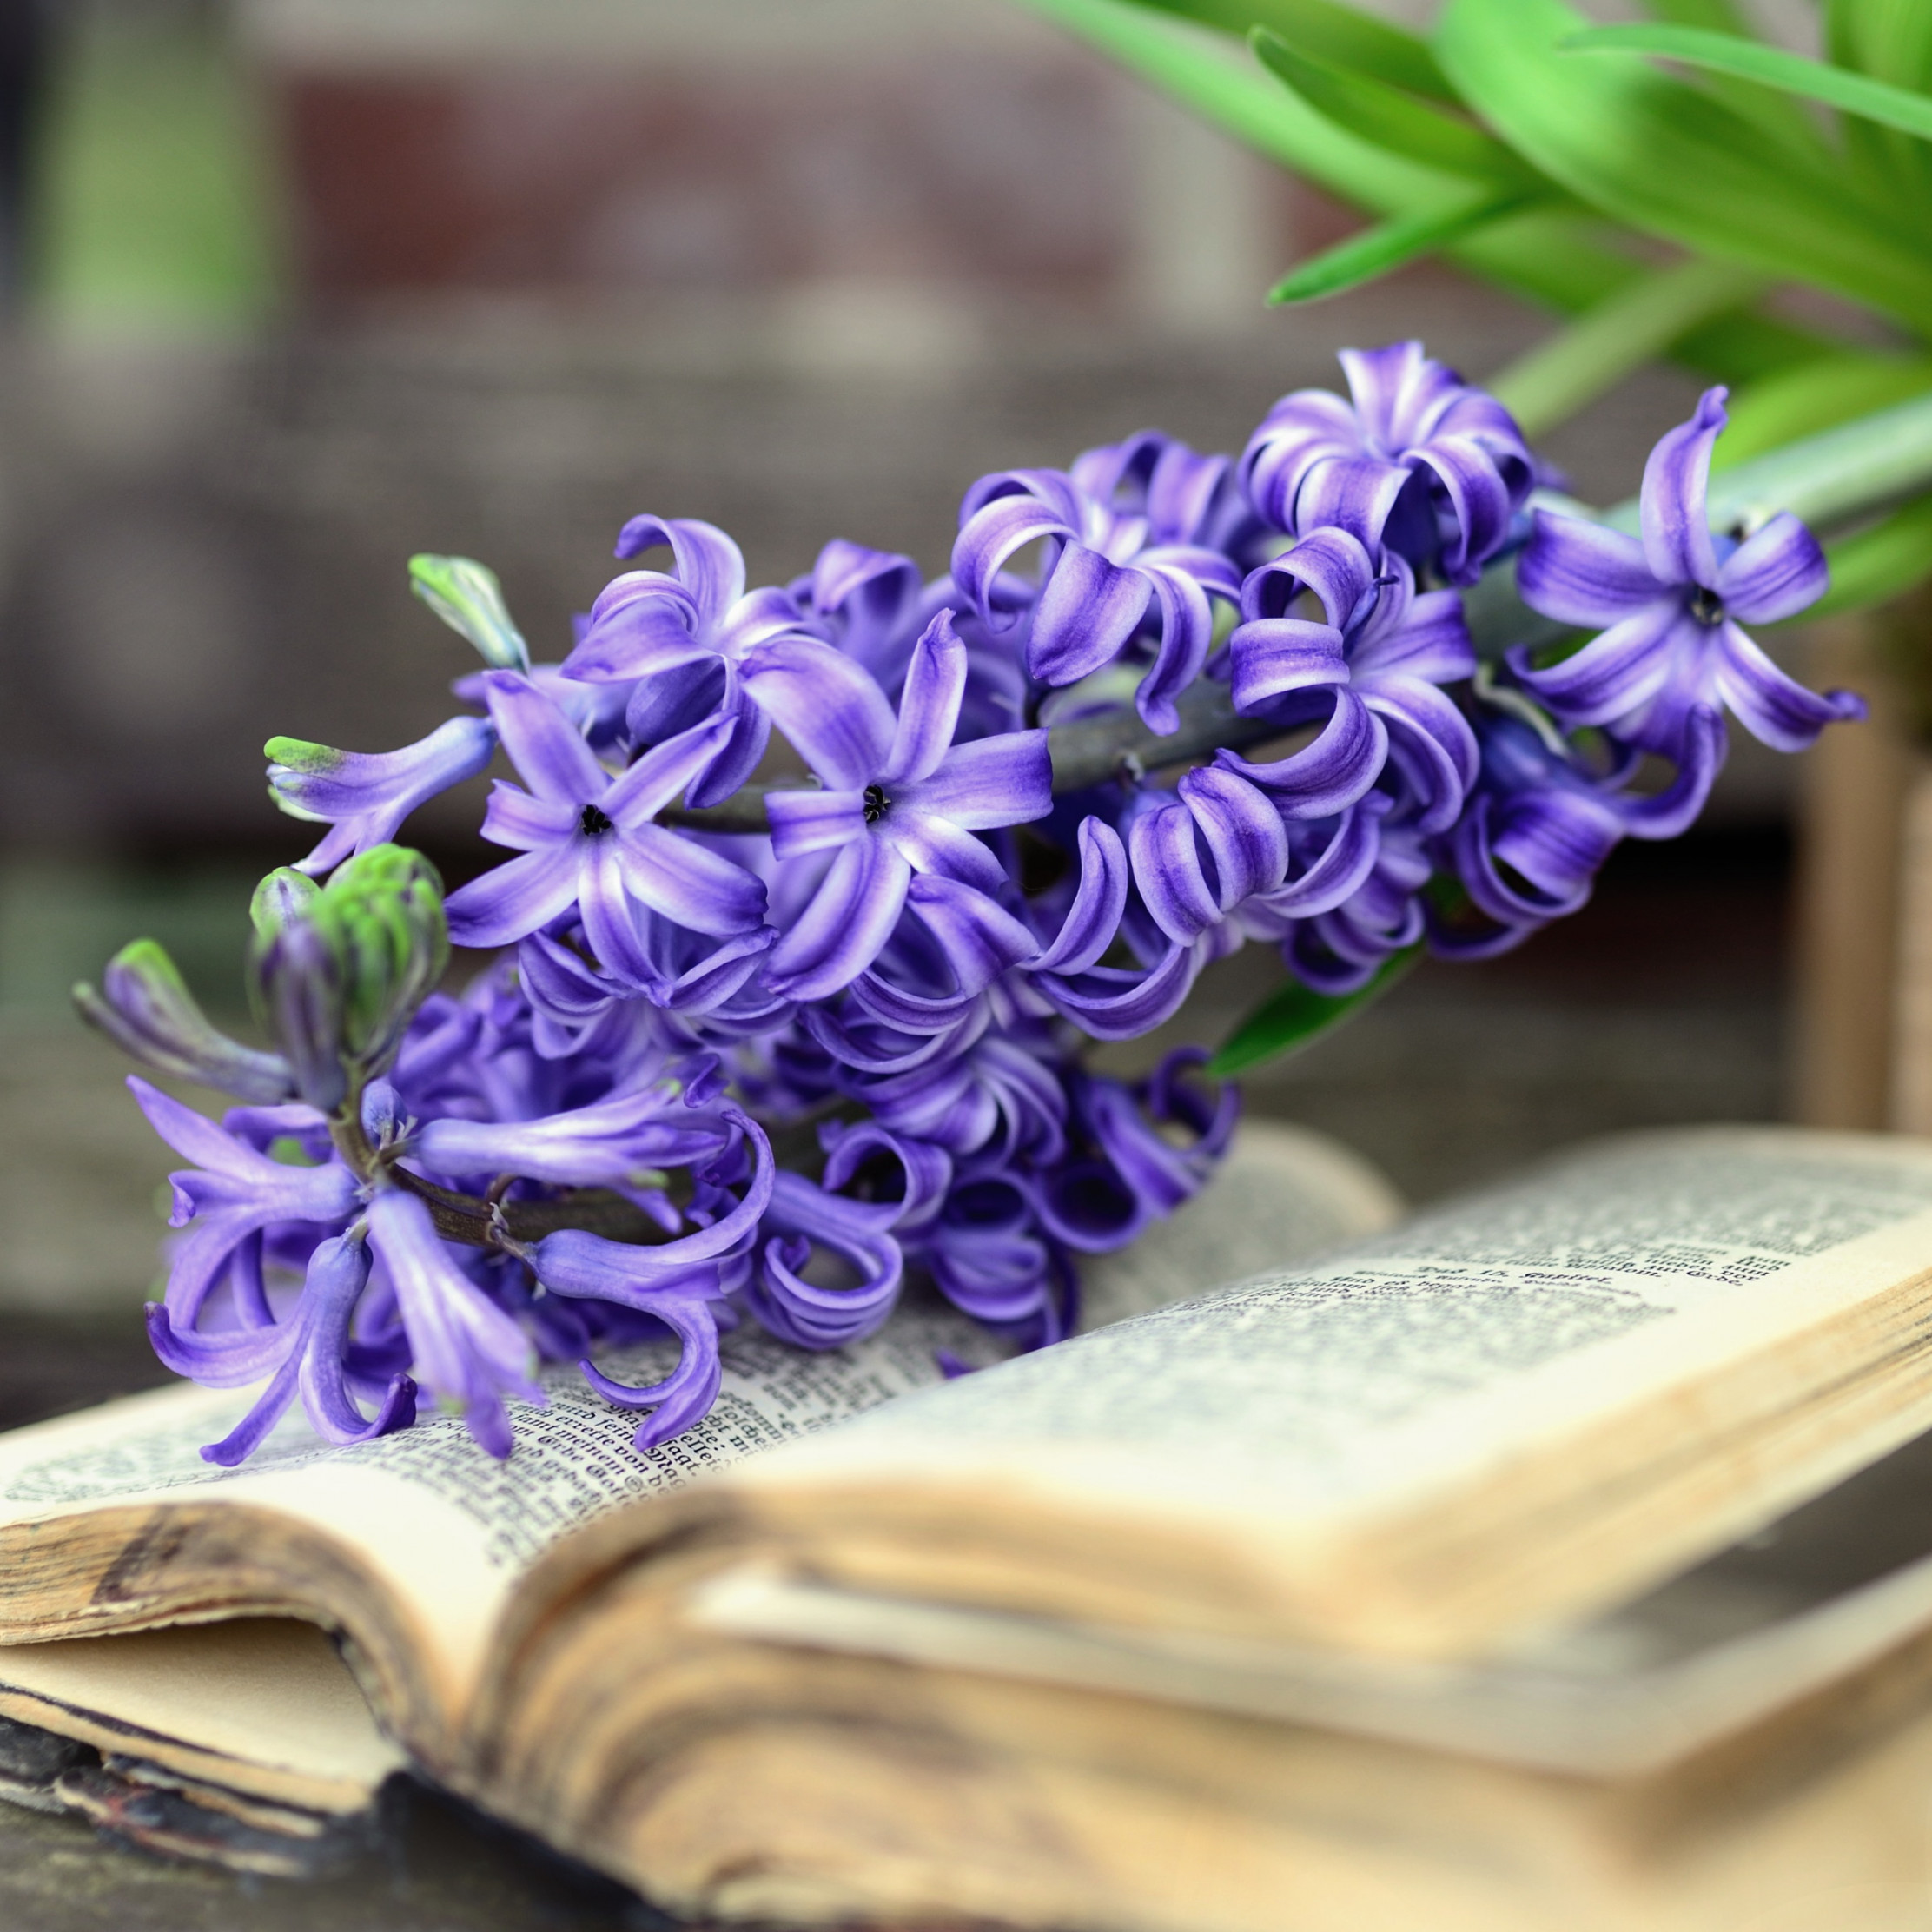 Download wallpaper: Hyacinth Spring flowers 2224x2224